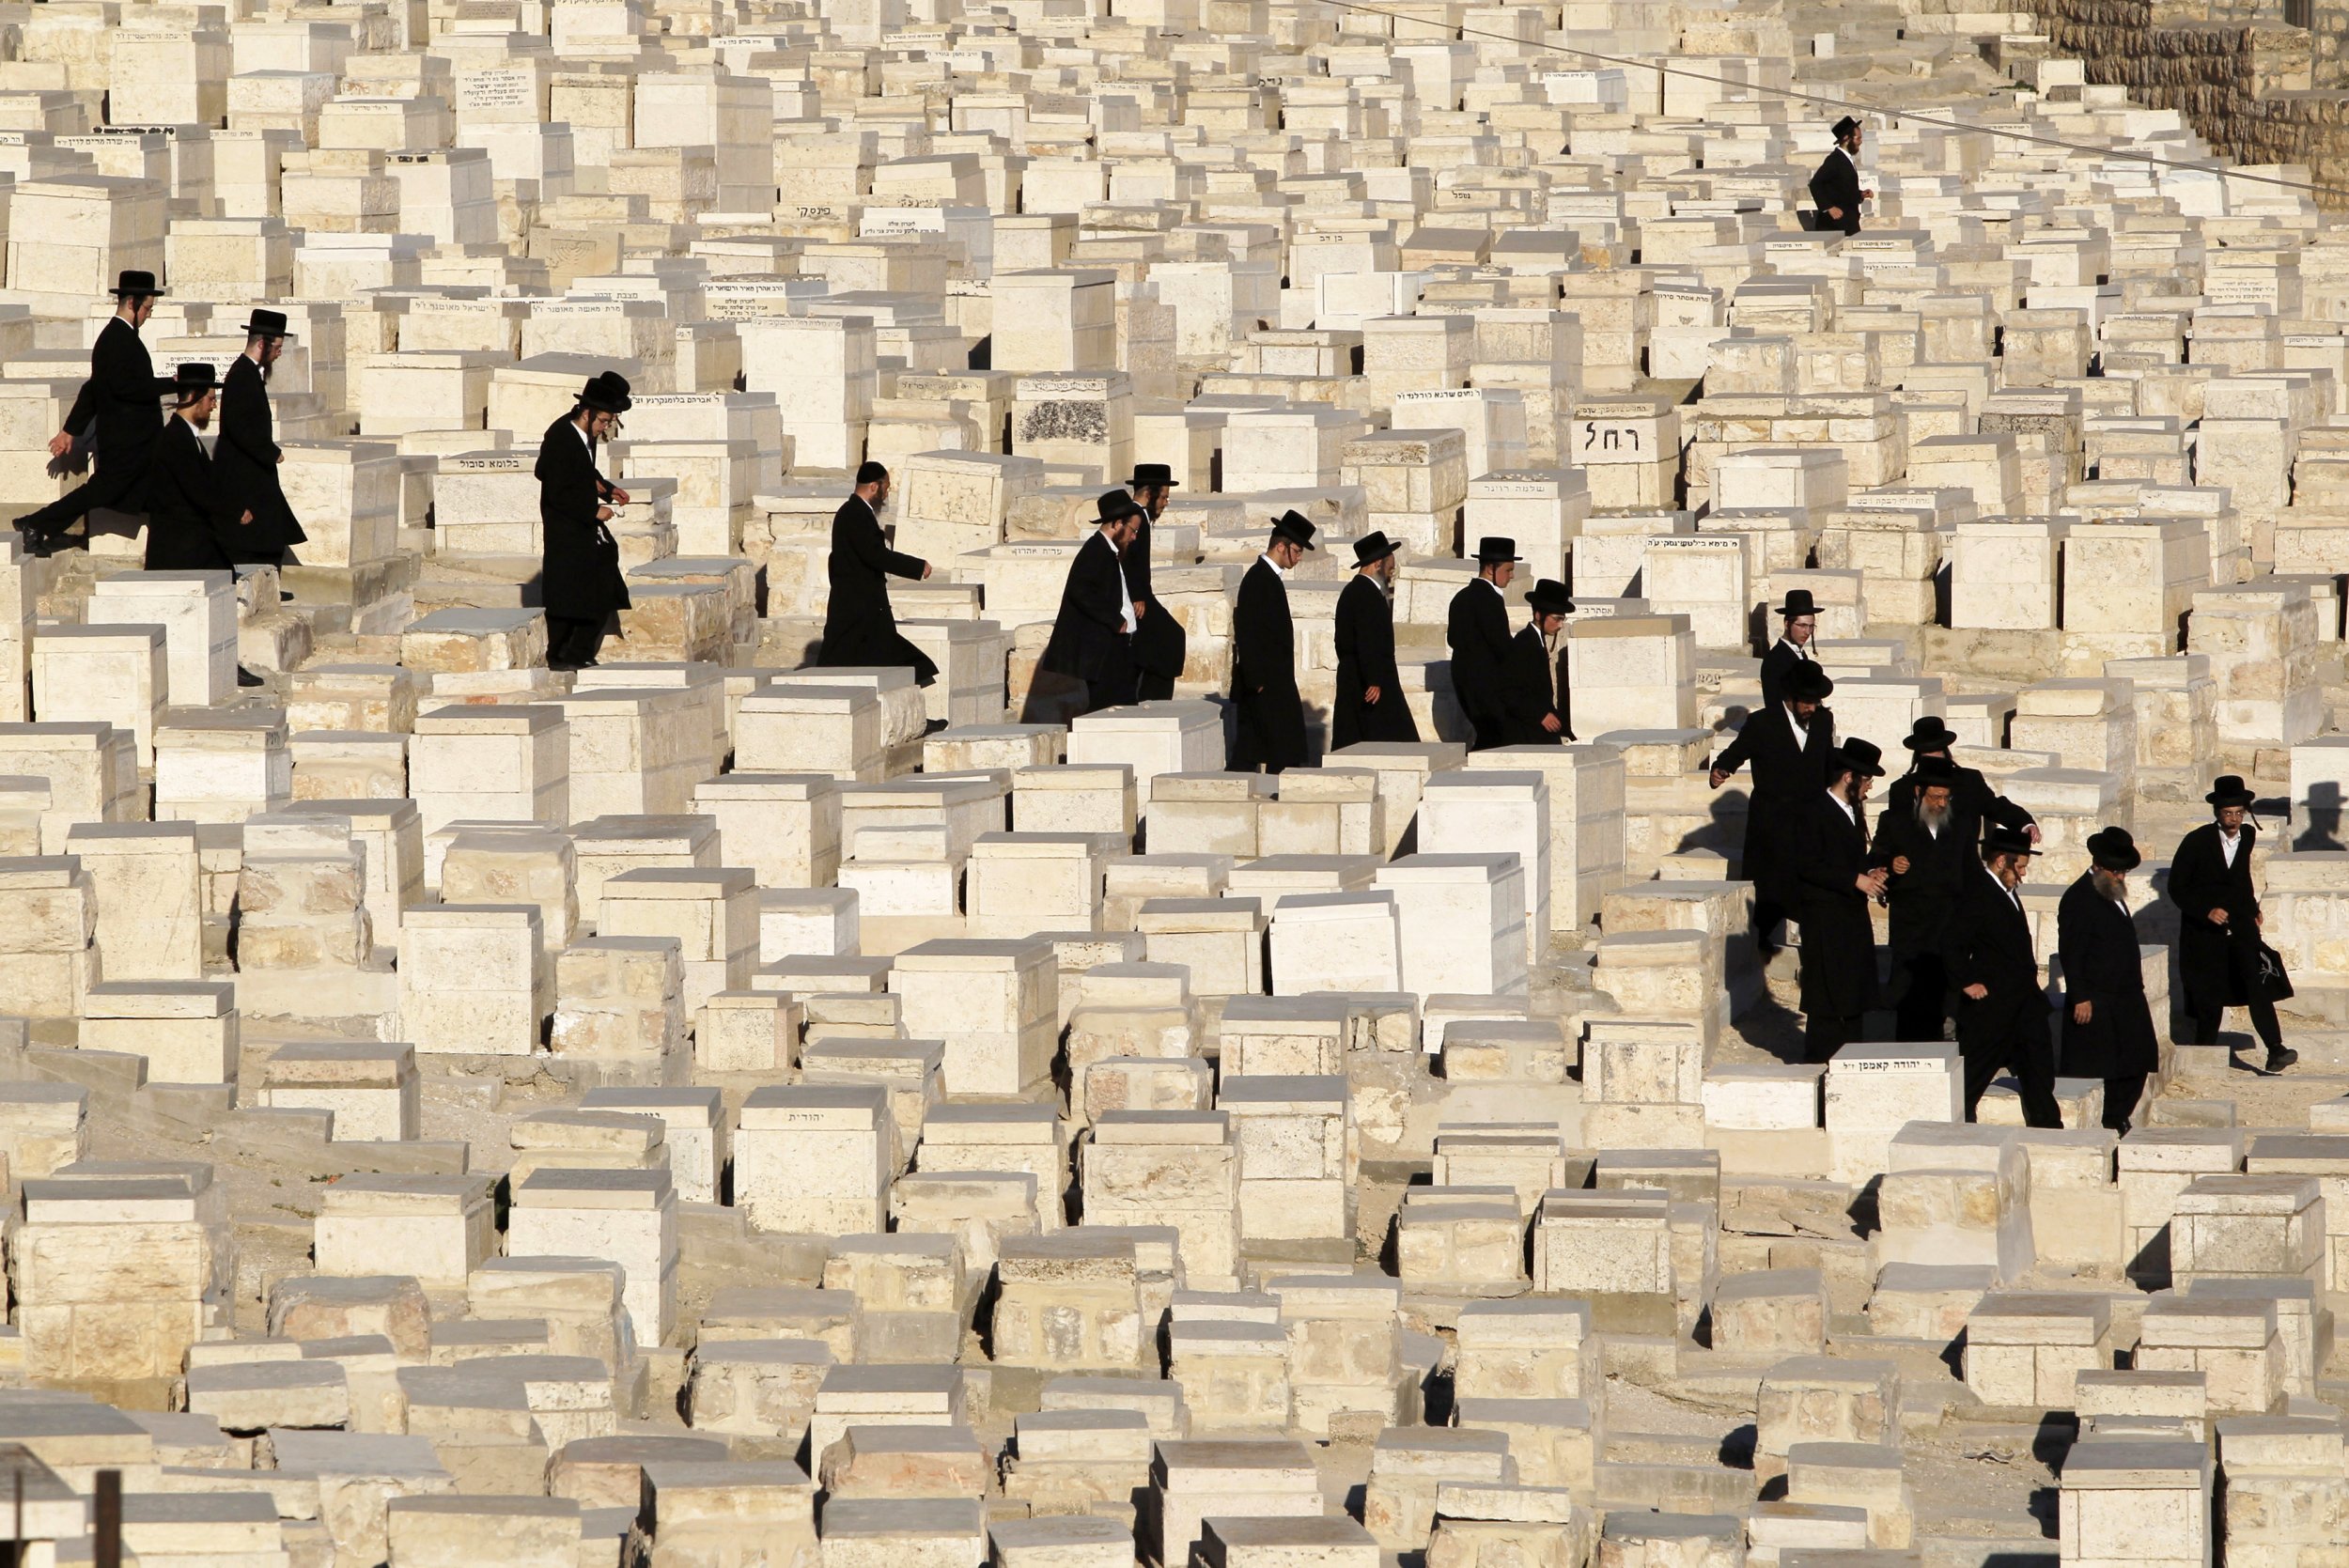 Jerusalem graveyard